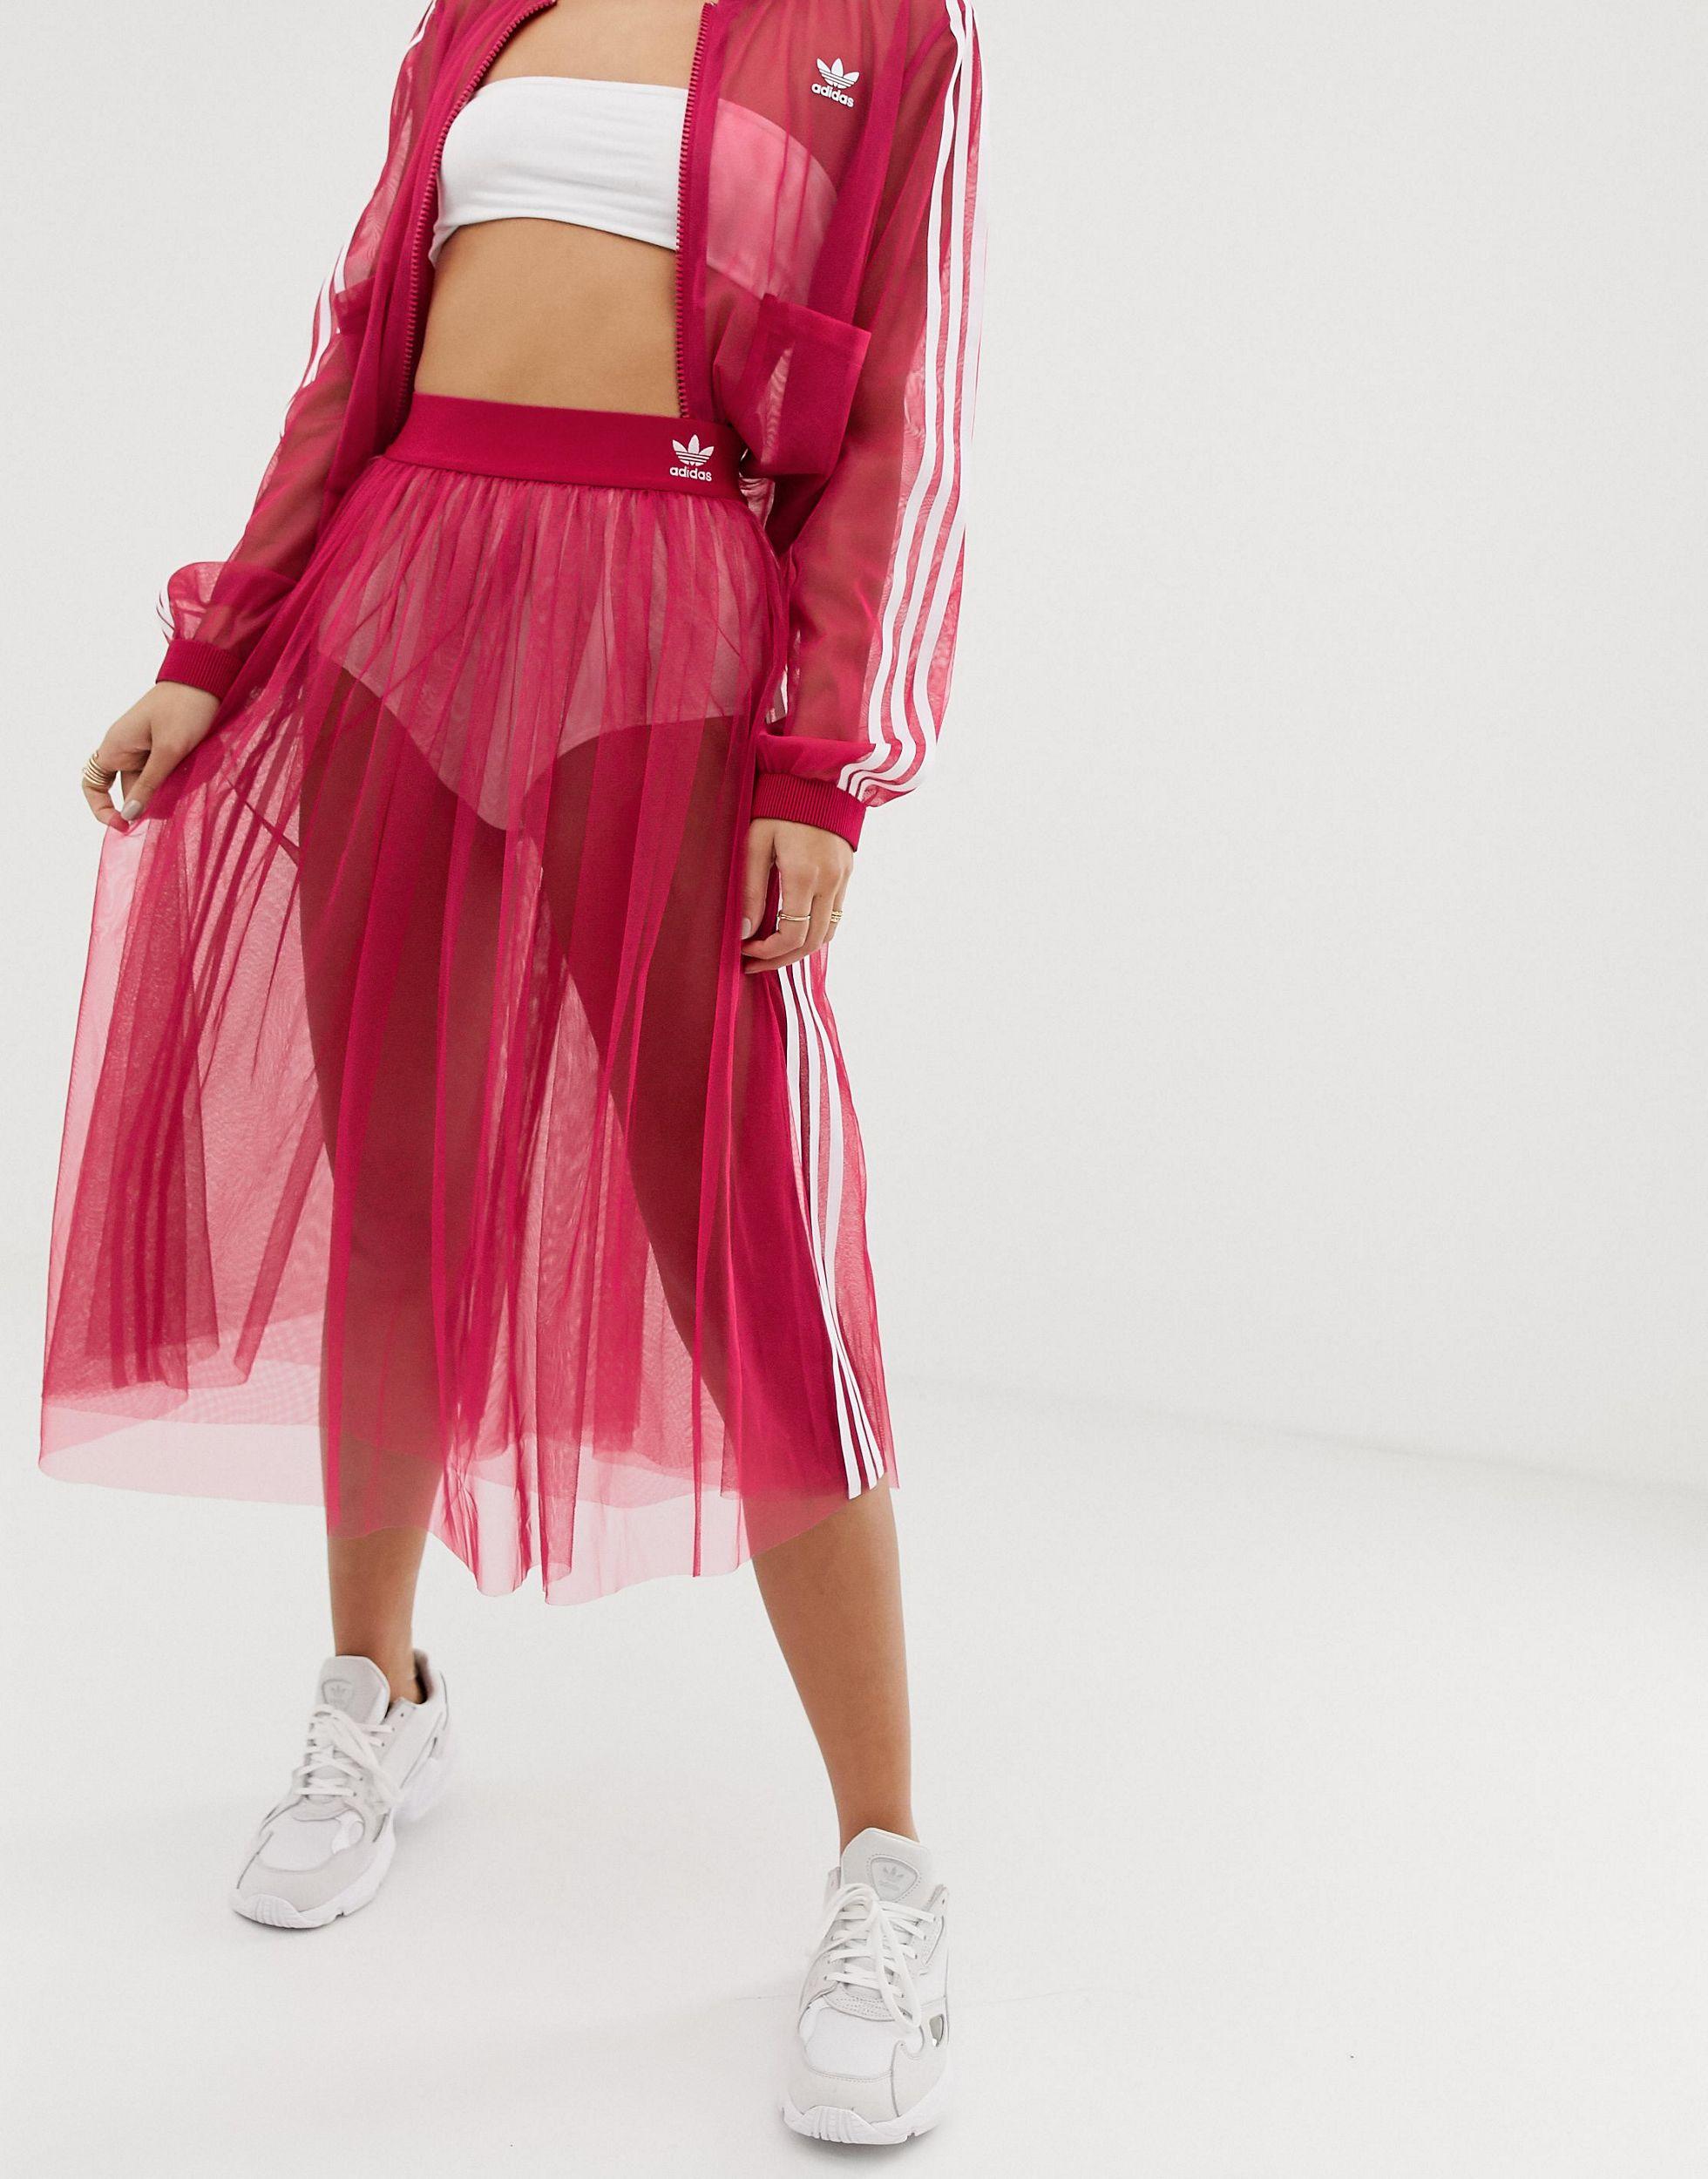 adidas Originals Sleek Three Stripe Mesh Tulle Skirt in Pink | Lyst